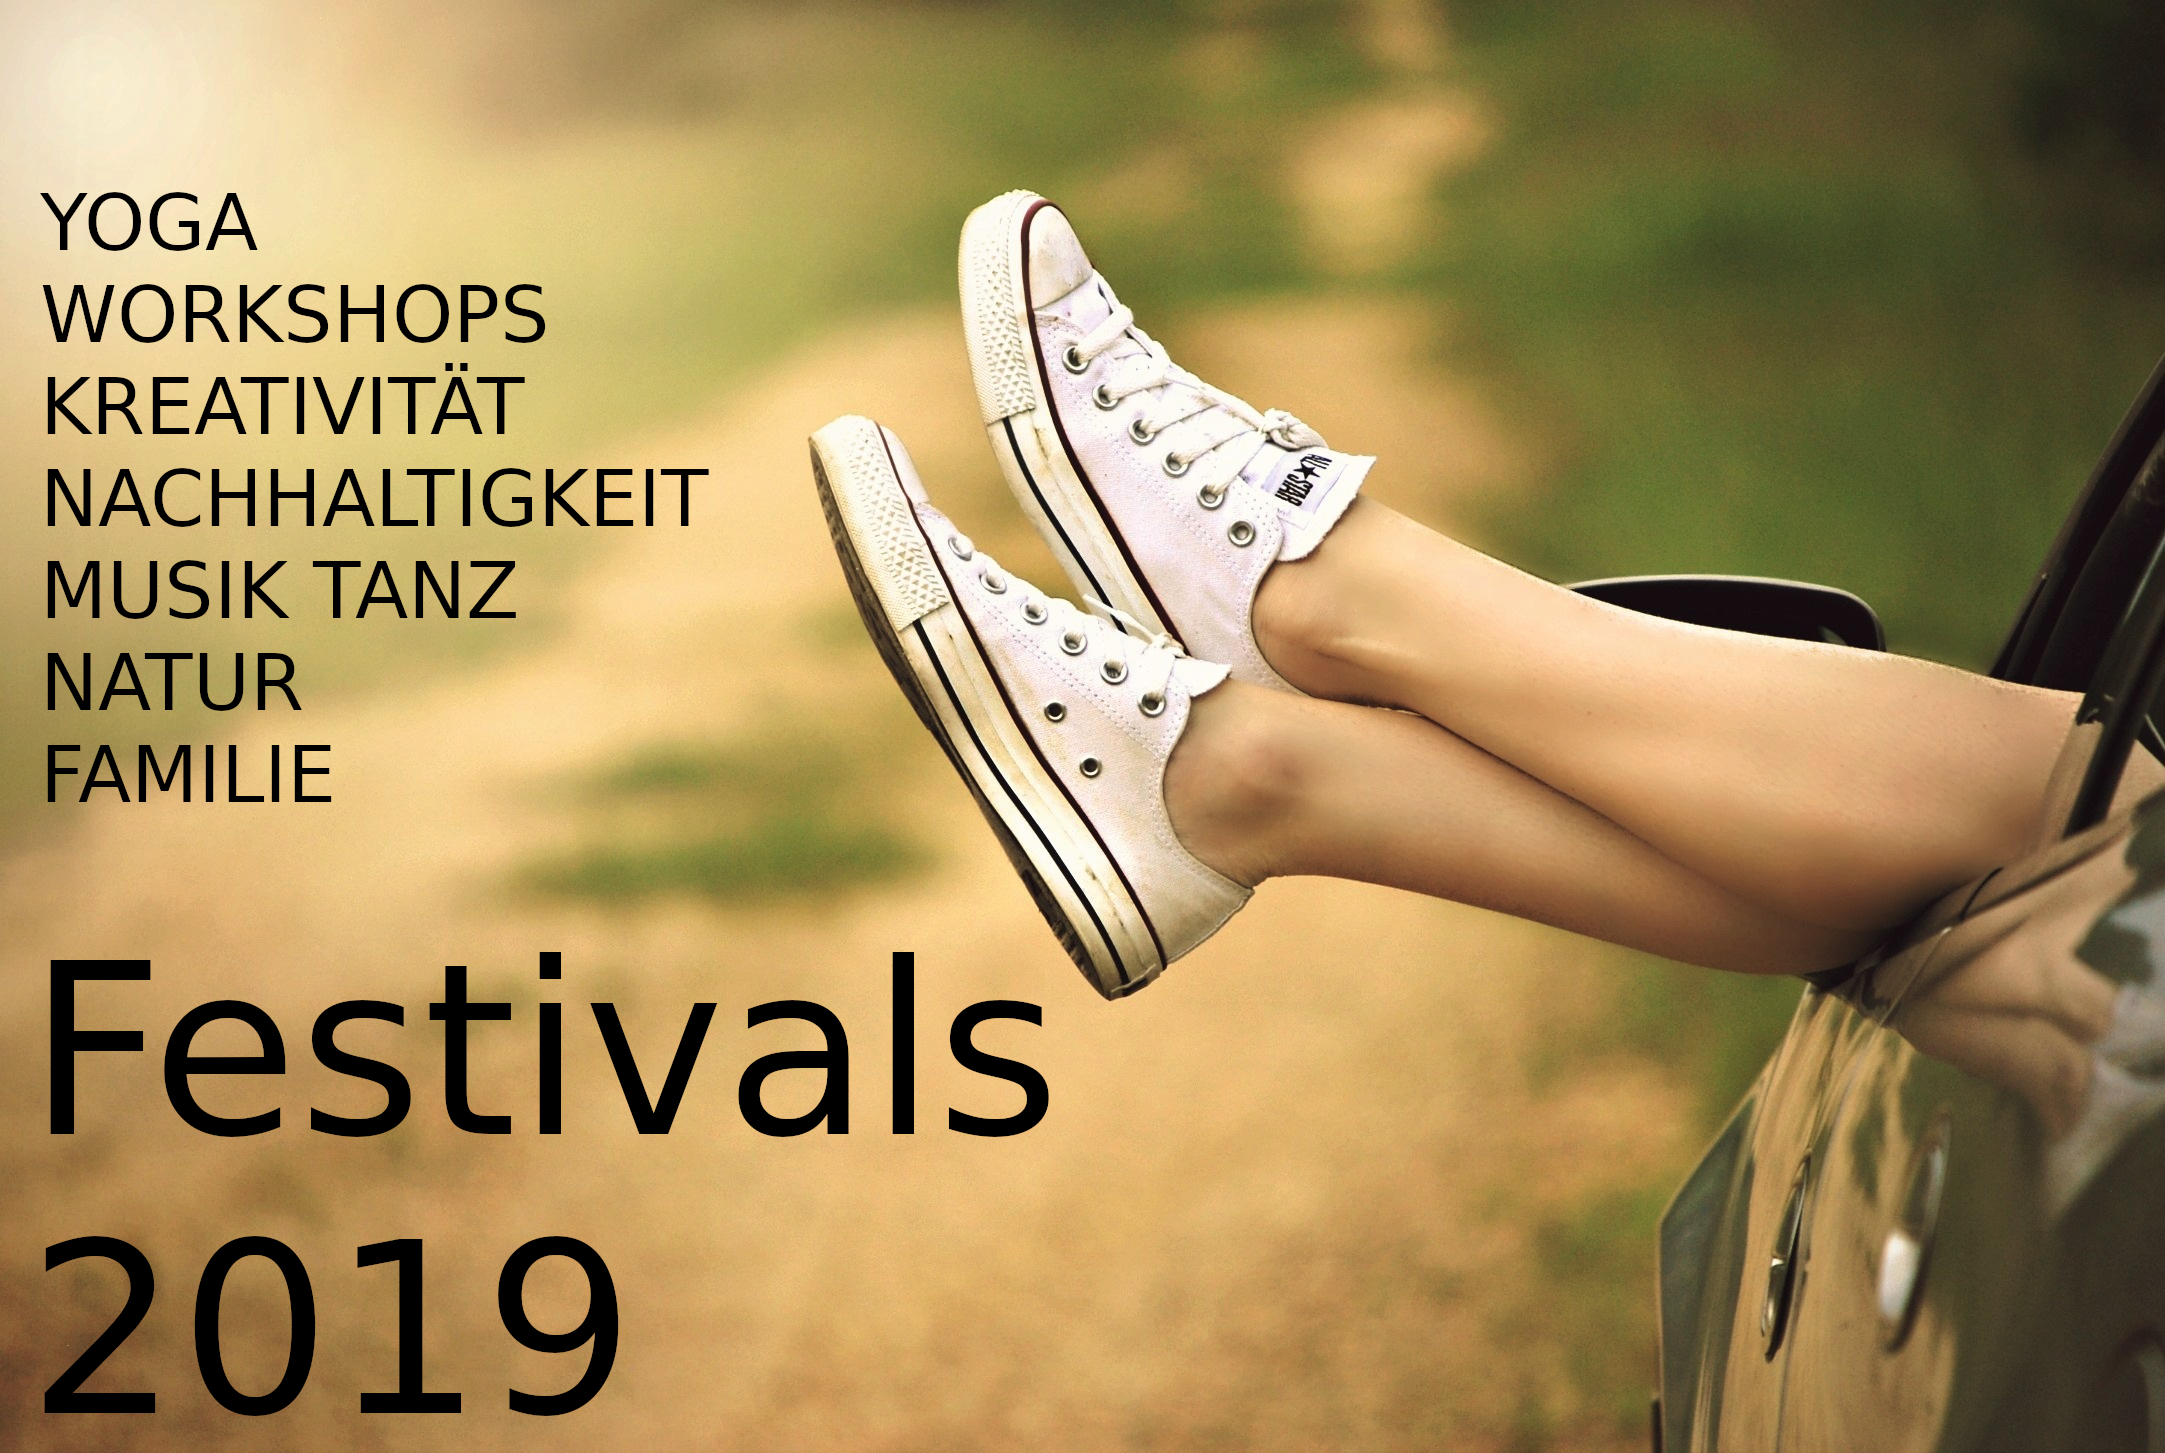 Festivals 2019